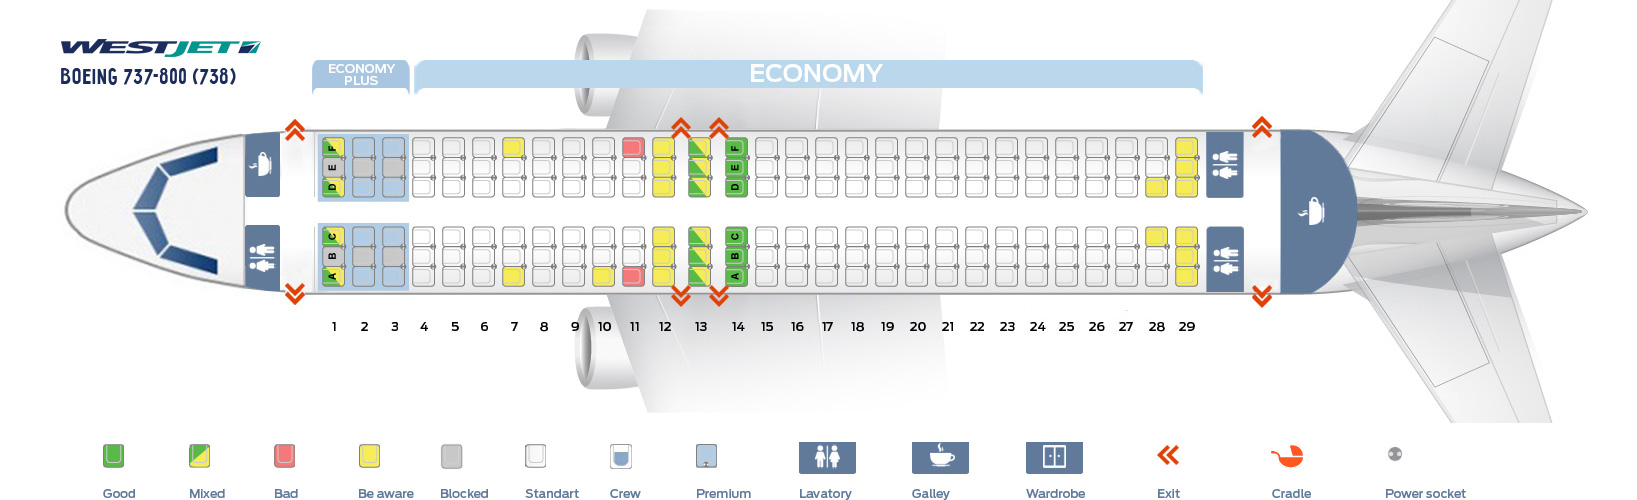 Westjet 737 800 Seating Chart